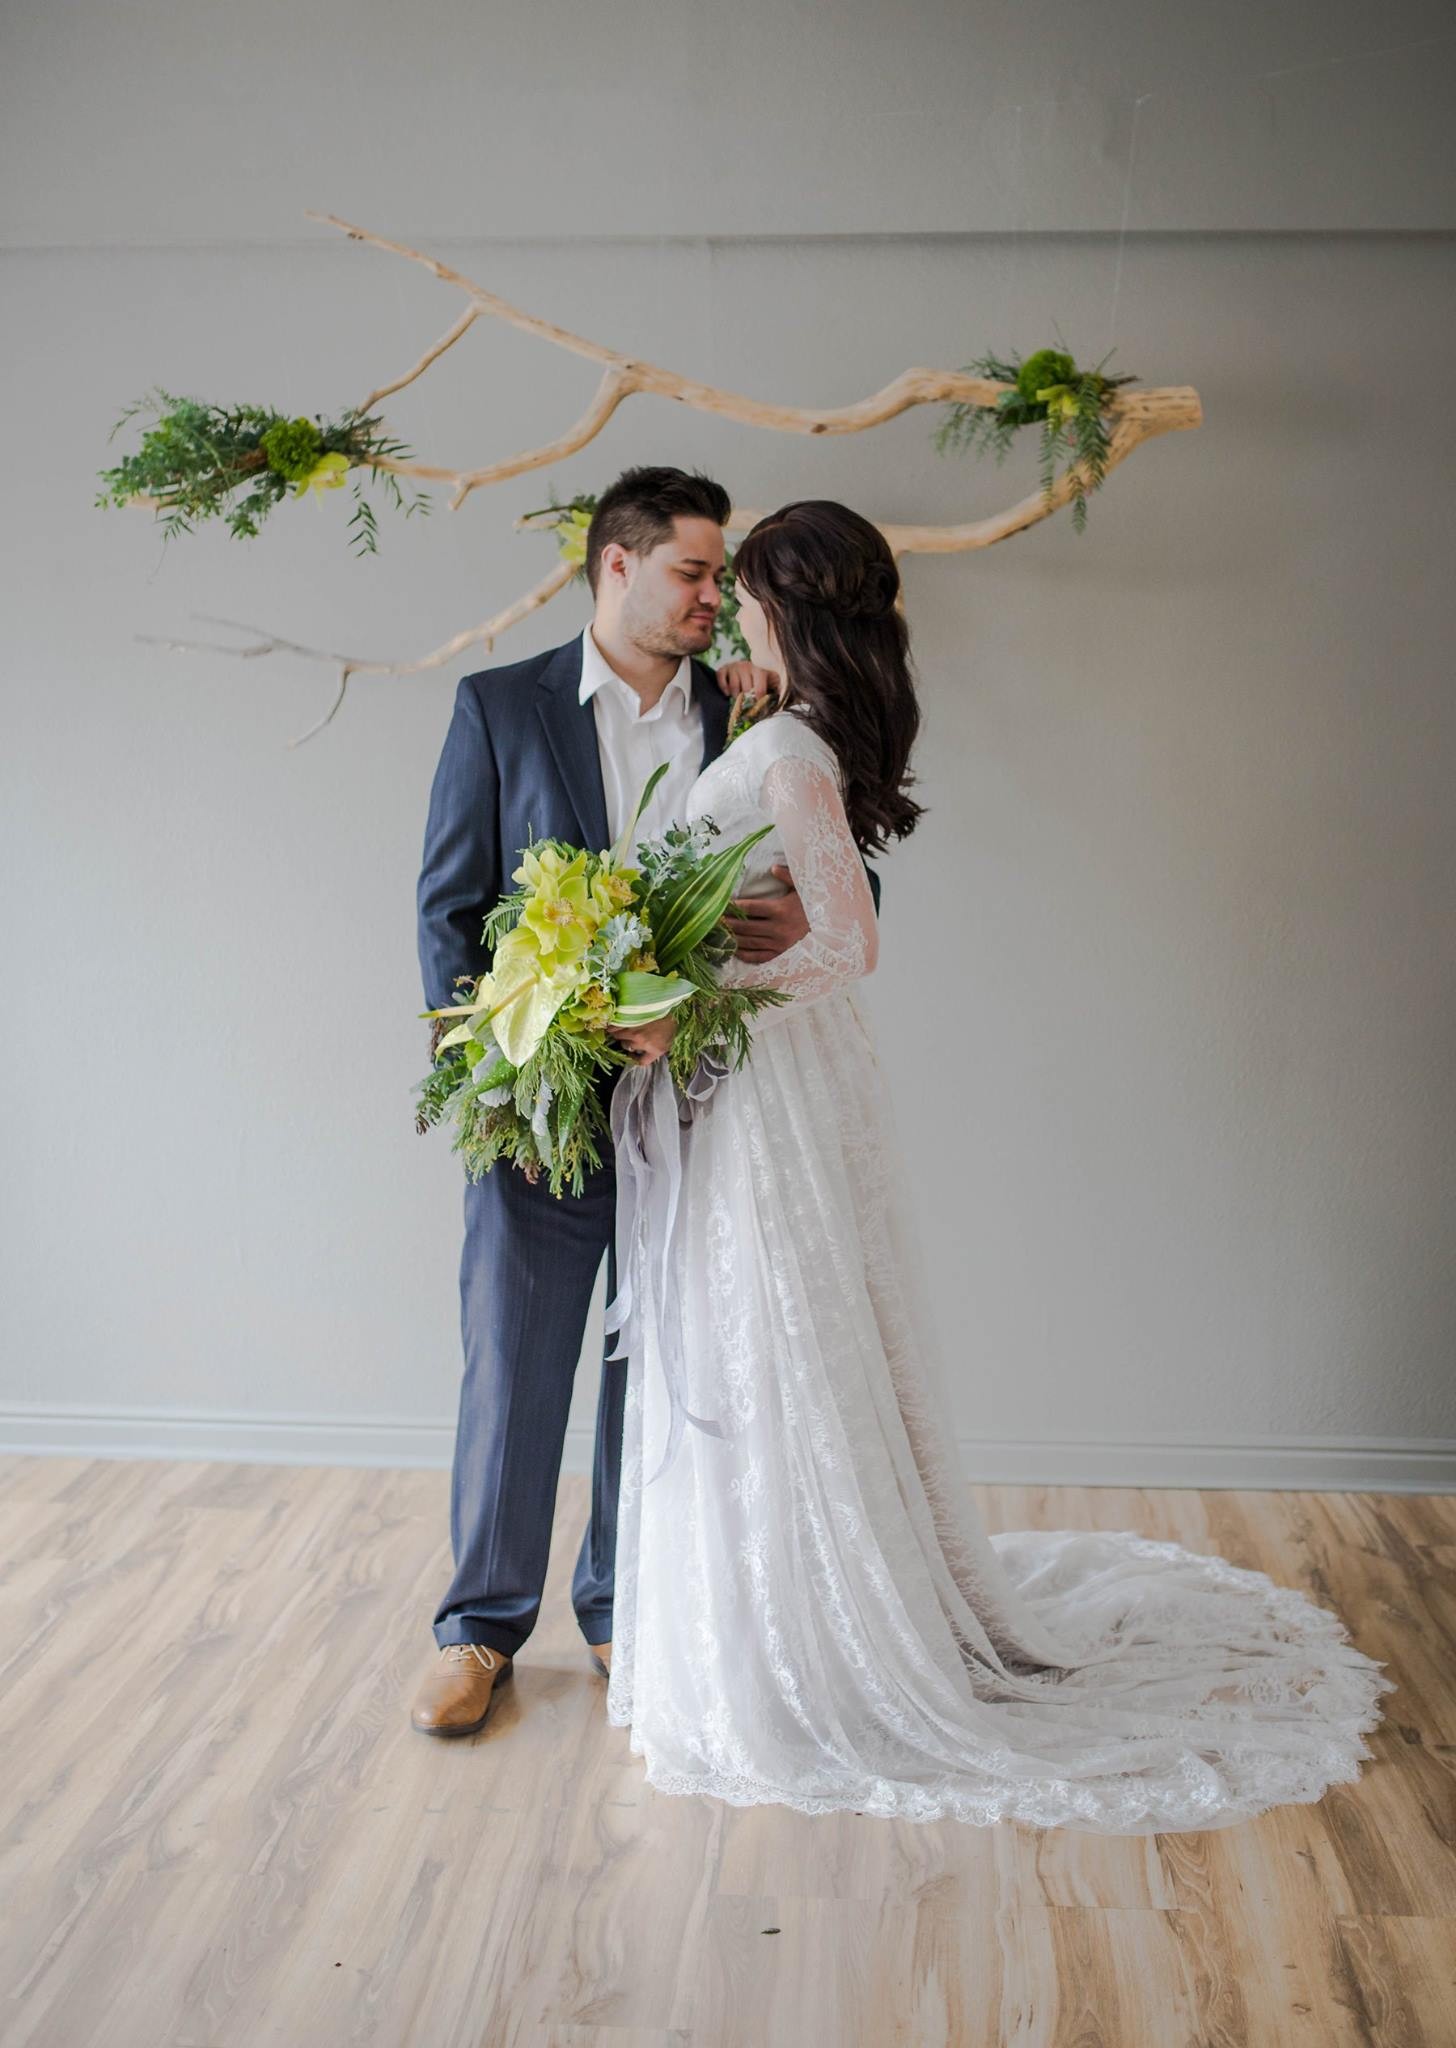 Utah studio bridals session by Stephanie Lorraine Photography.jpg